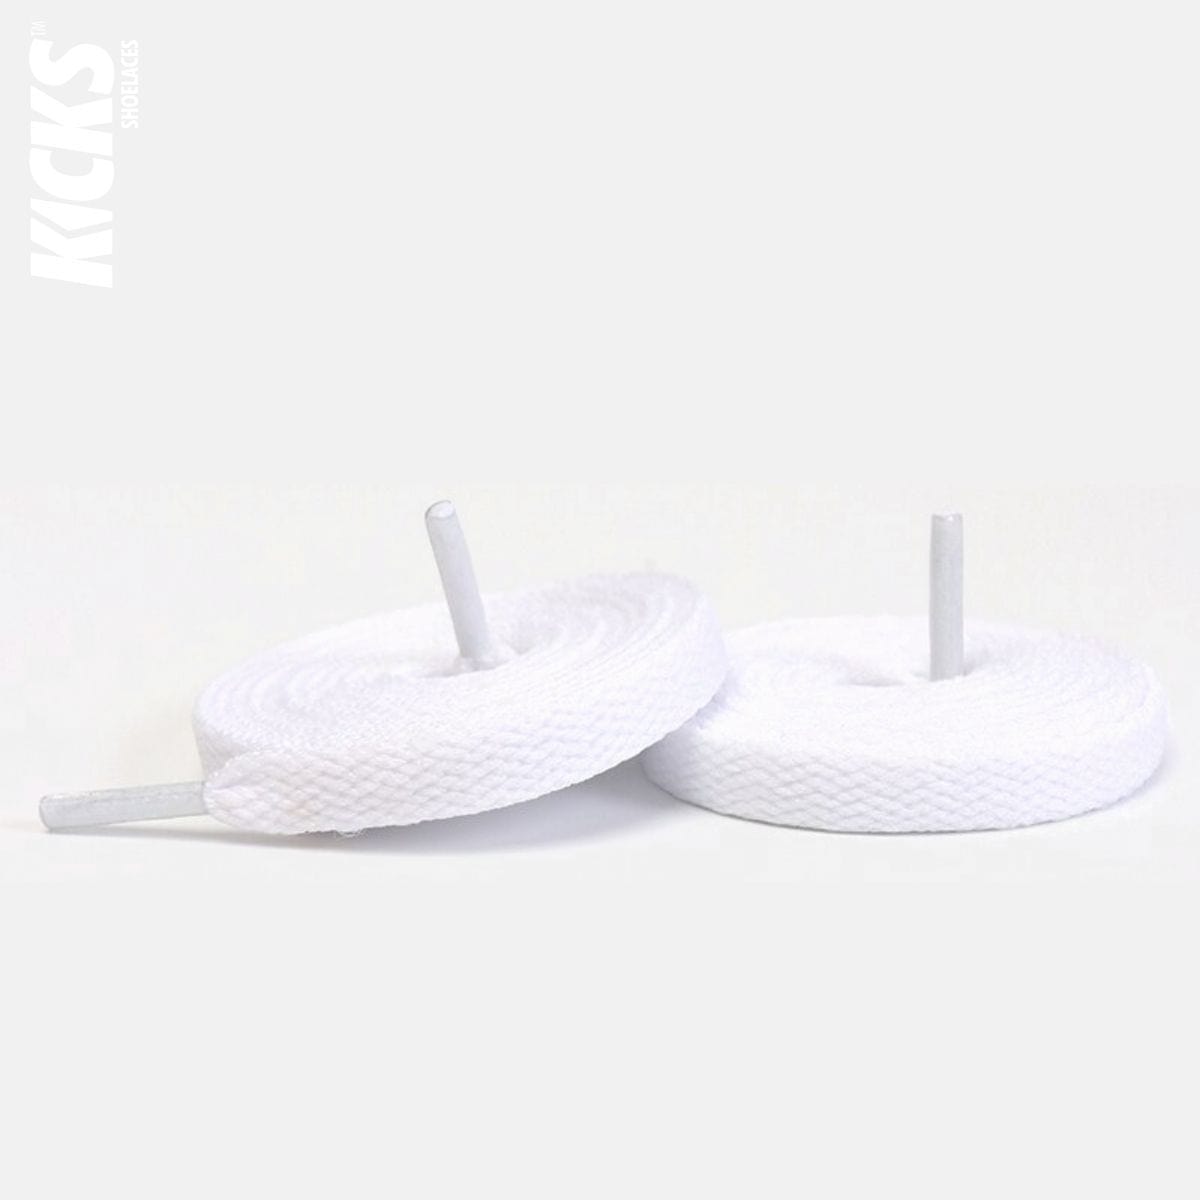 Nike Dunk Replacement Shoelaces - Kicks Shoelaces